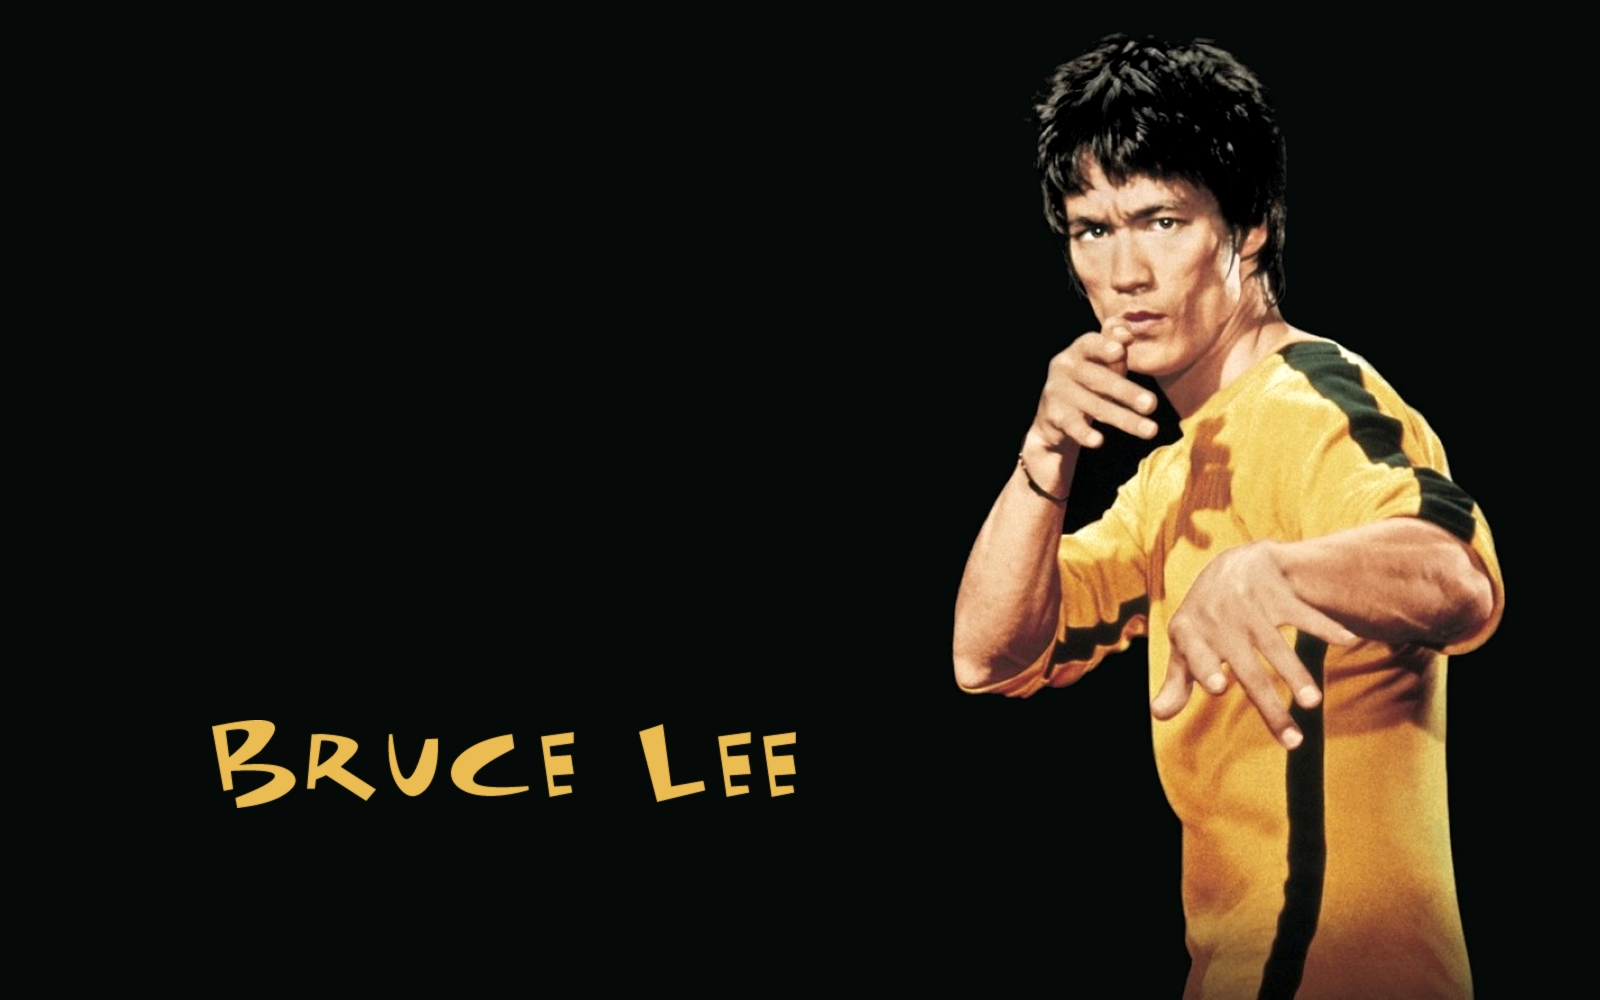 Bruce Lee Quotes Wallpaper | Wallpaper Kid Galleries @ www ...